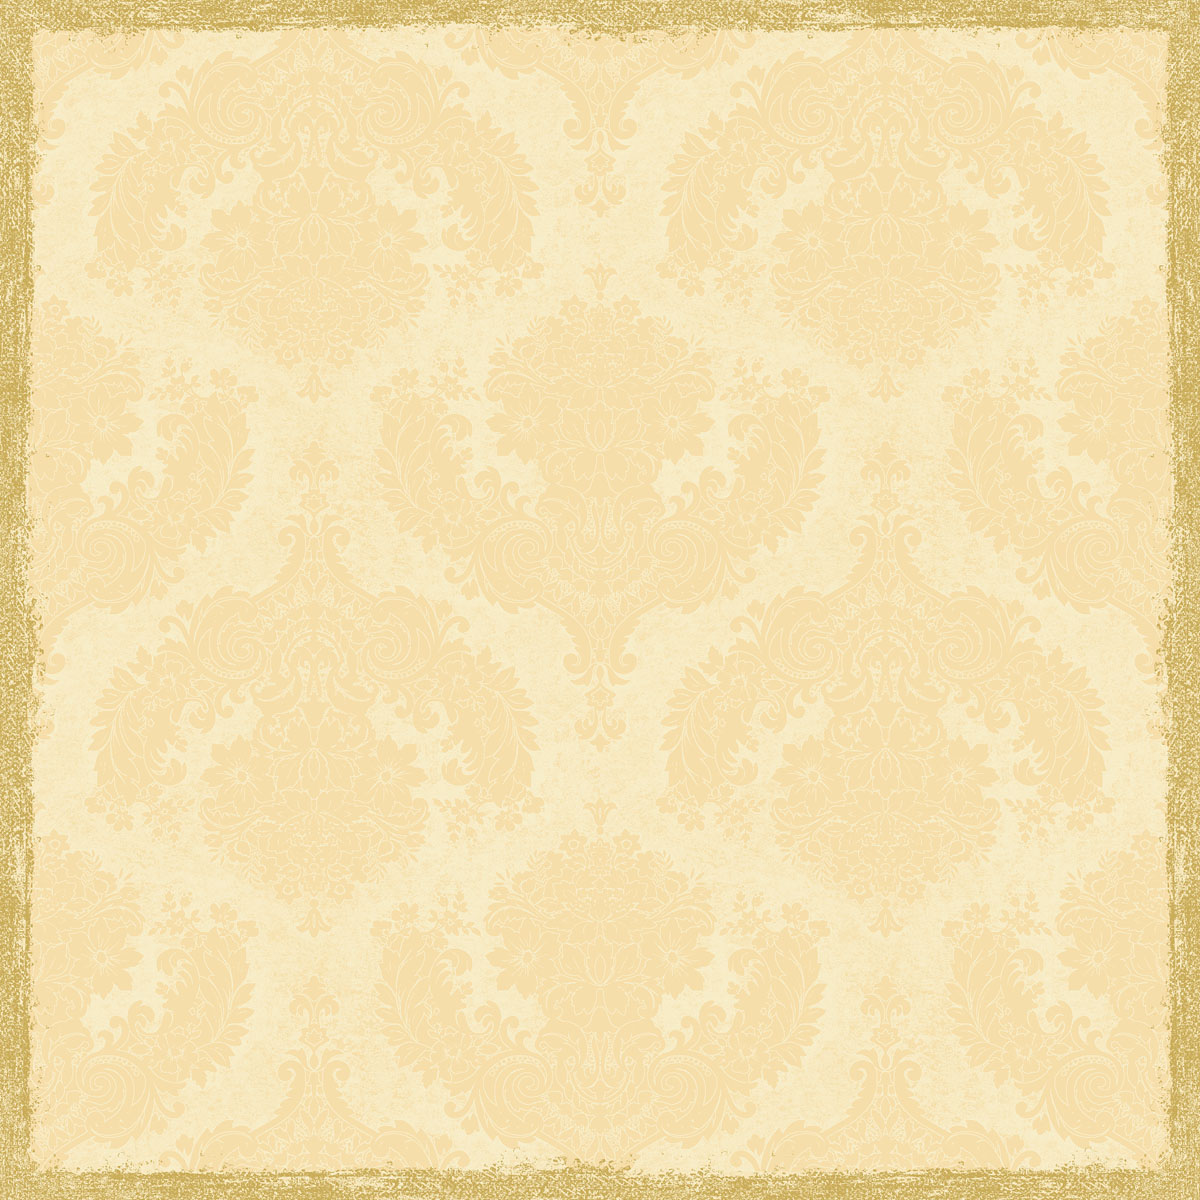 Duni Dunicel-Mitteldecken 84 x 84 cm Royal cream